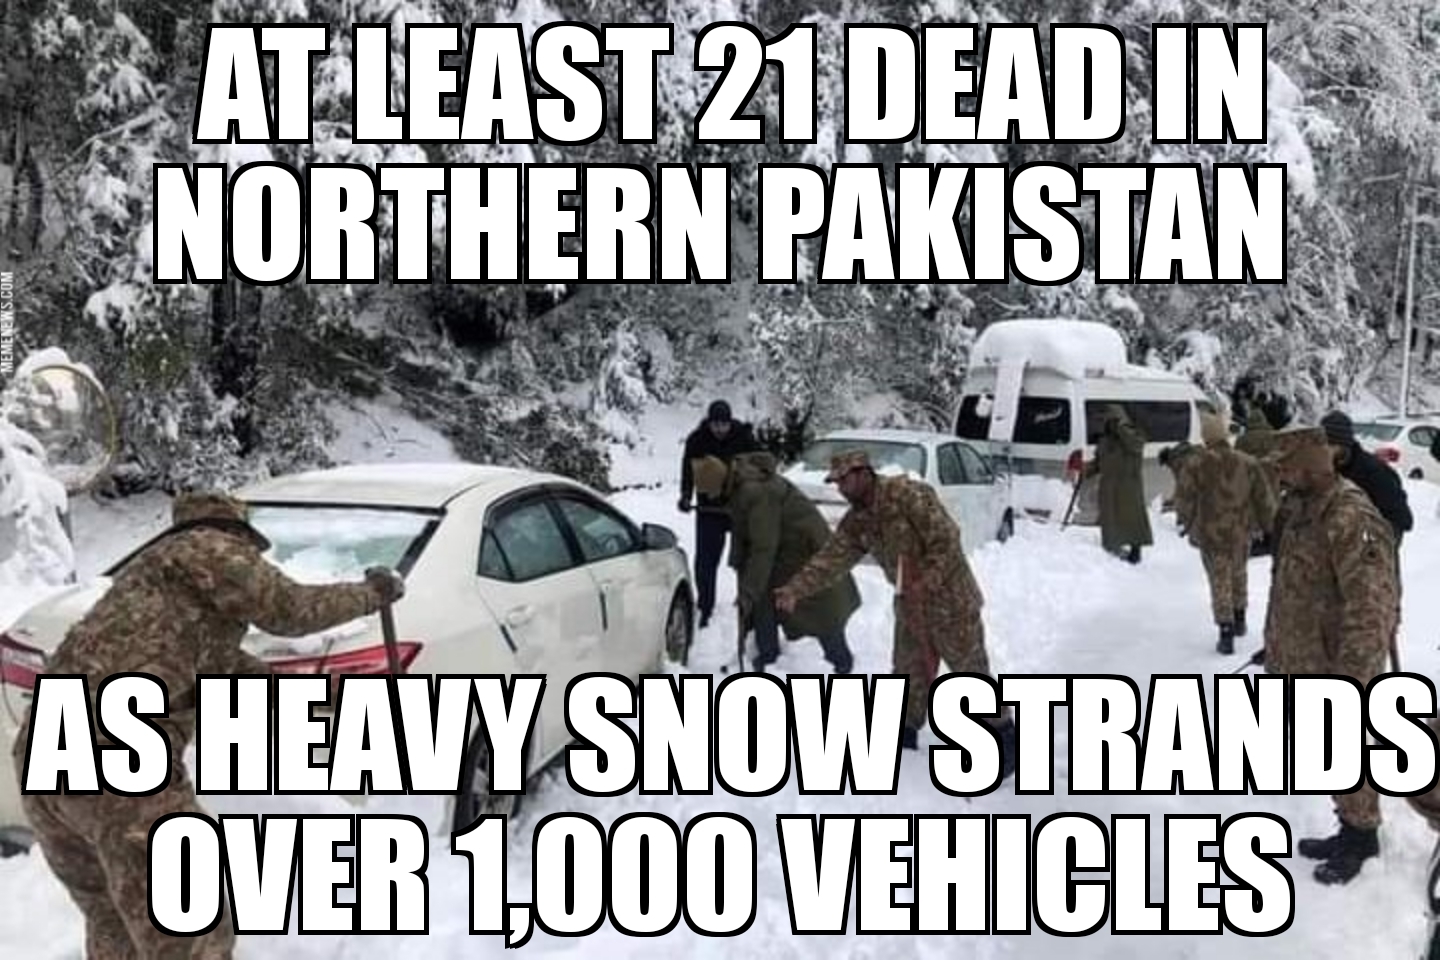 Pakistan snow strands cars